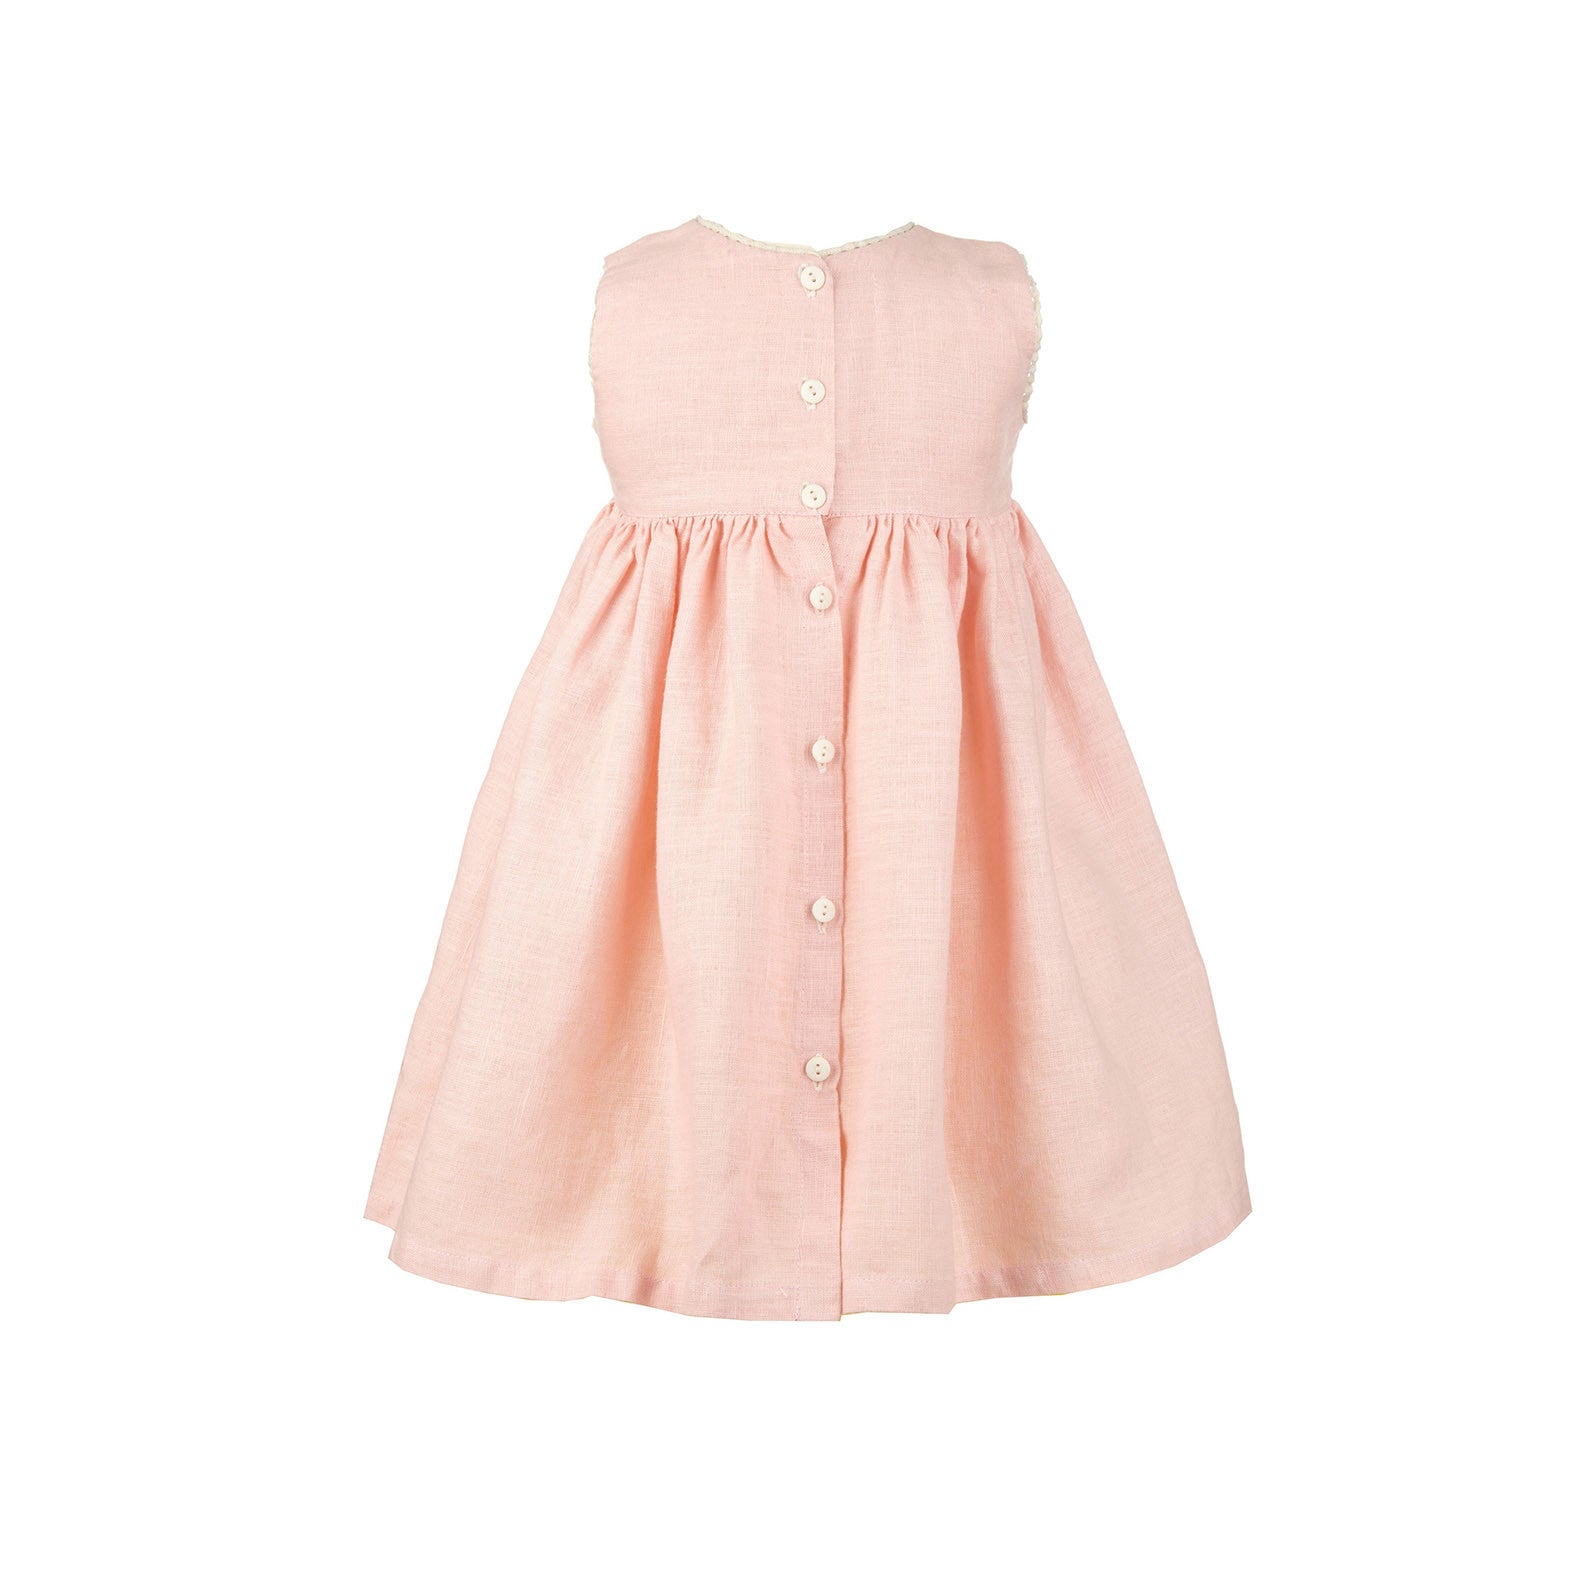 Pink Embroidered Flowers Sleeveless Children's Dress | 100% Linen